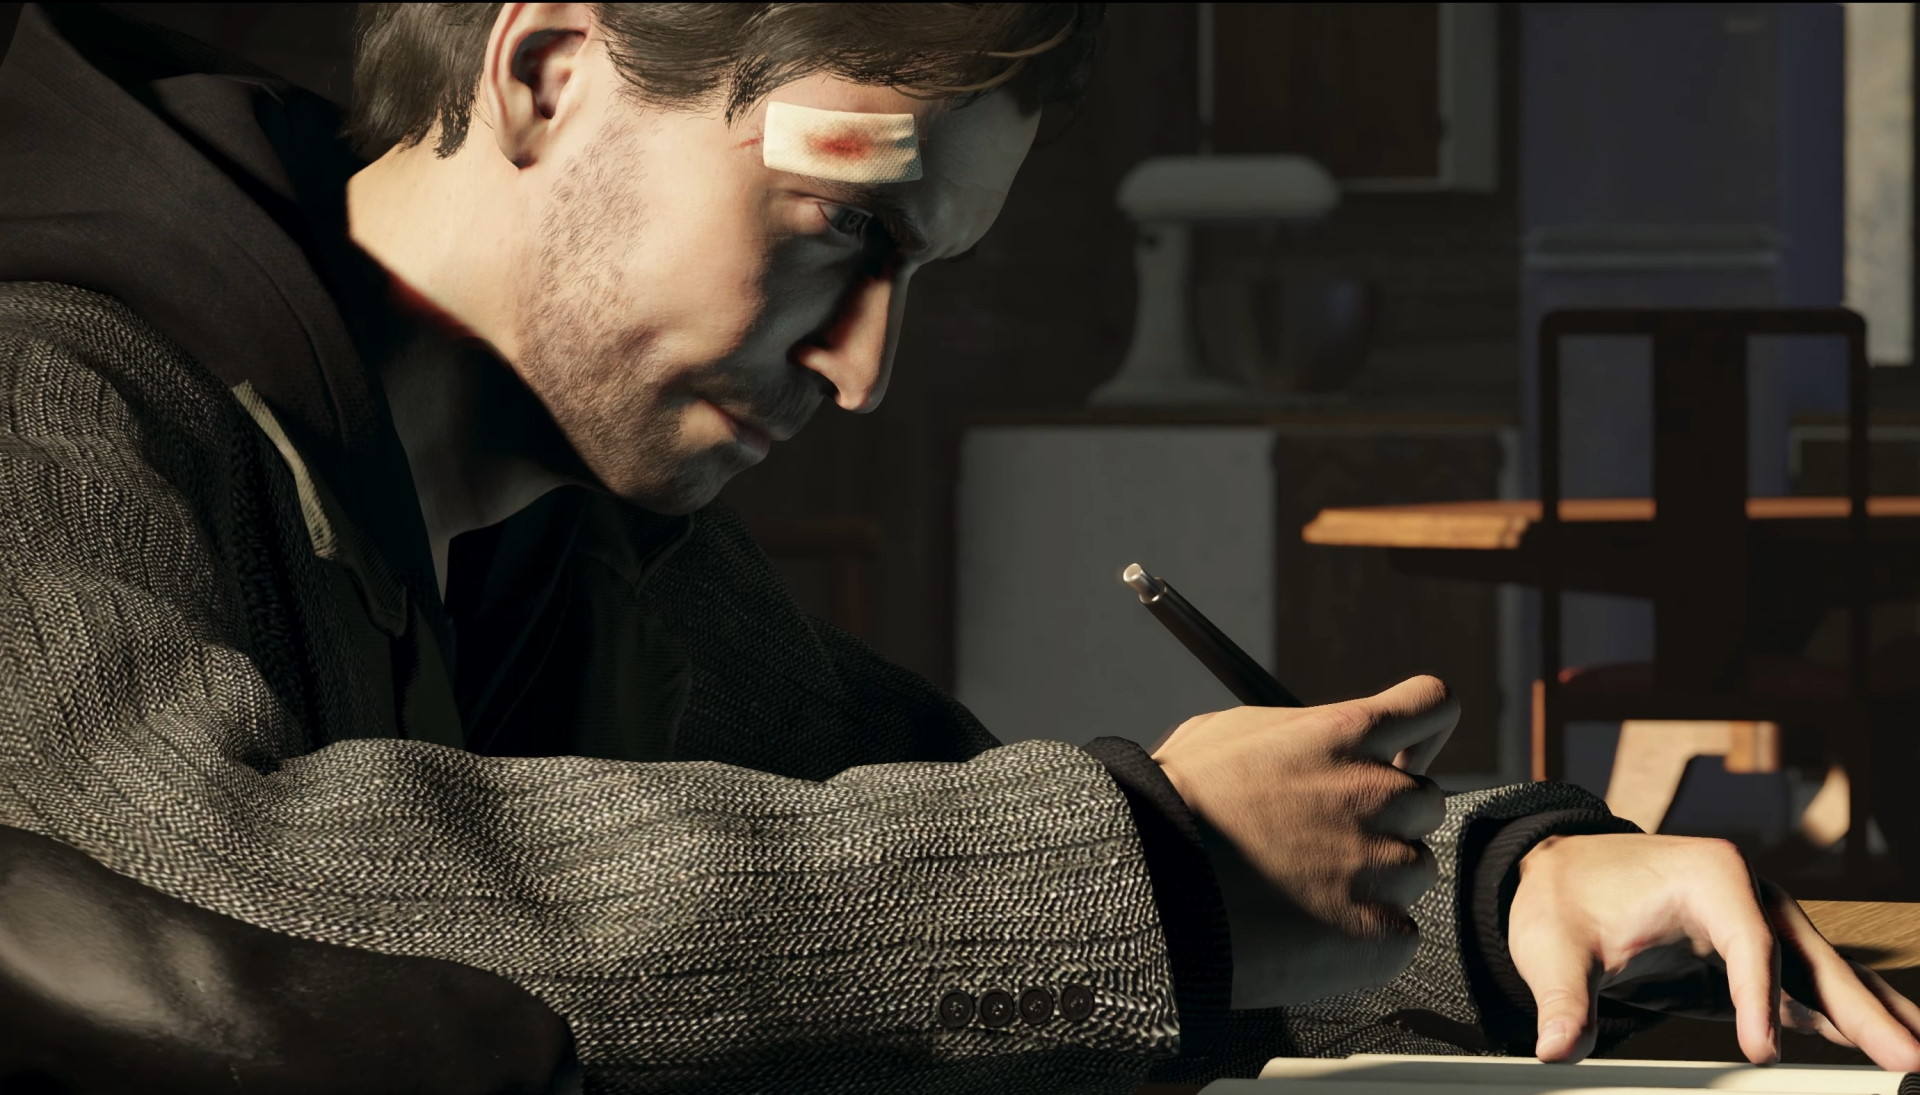 Alan Wake Remastered - PlayStation Showcase 2021: Announce Trailer